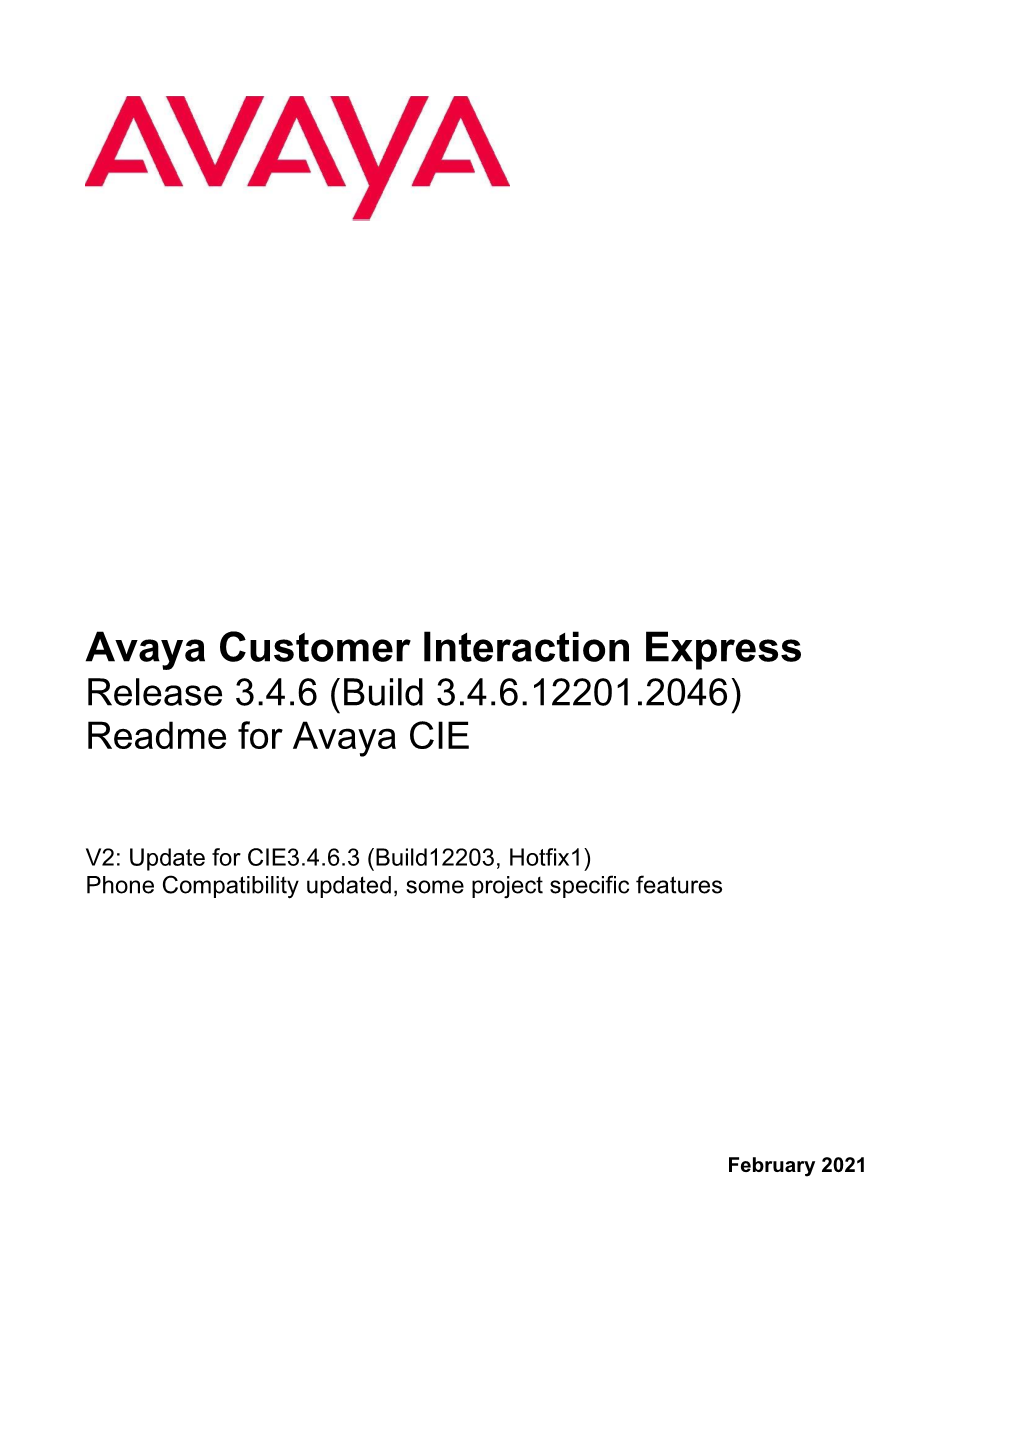 Avaya Customer Interaction Express Release 3.4.6 (Build 3.4.6.12201.2046) Readme for Avaya CIE